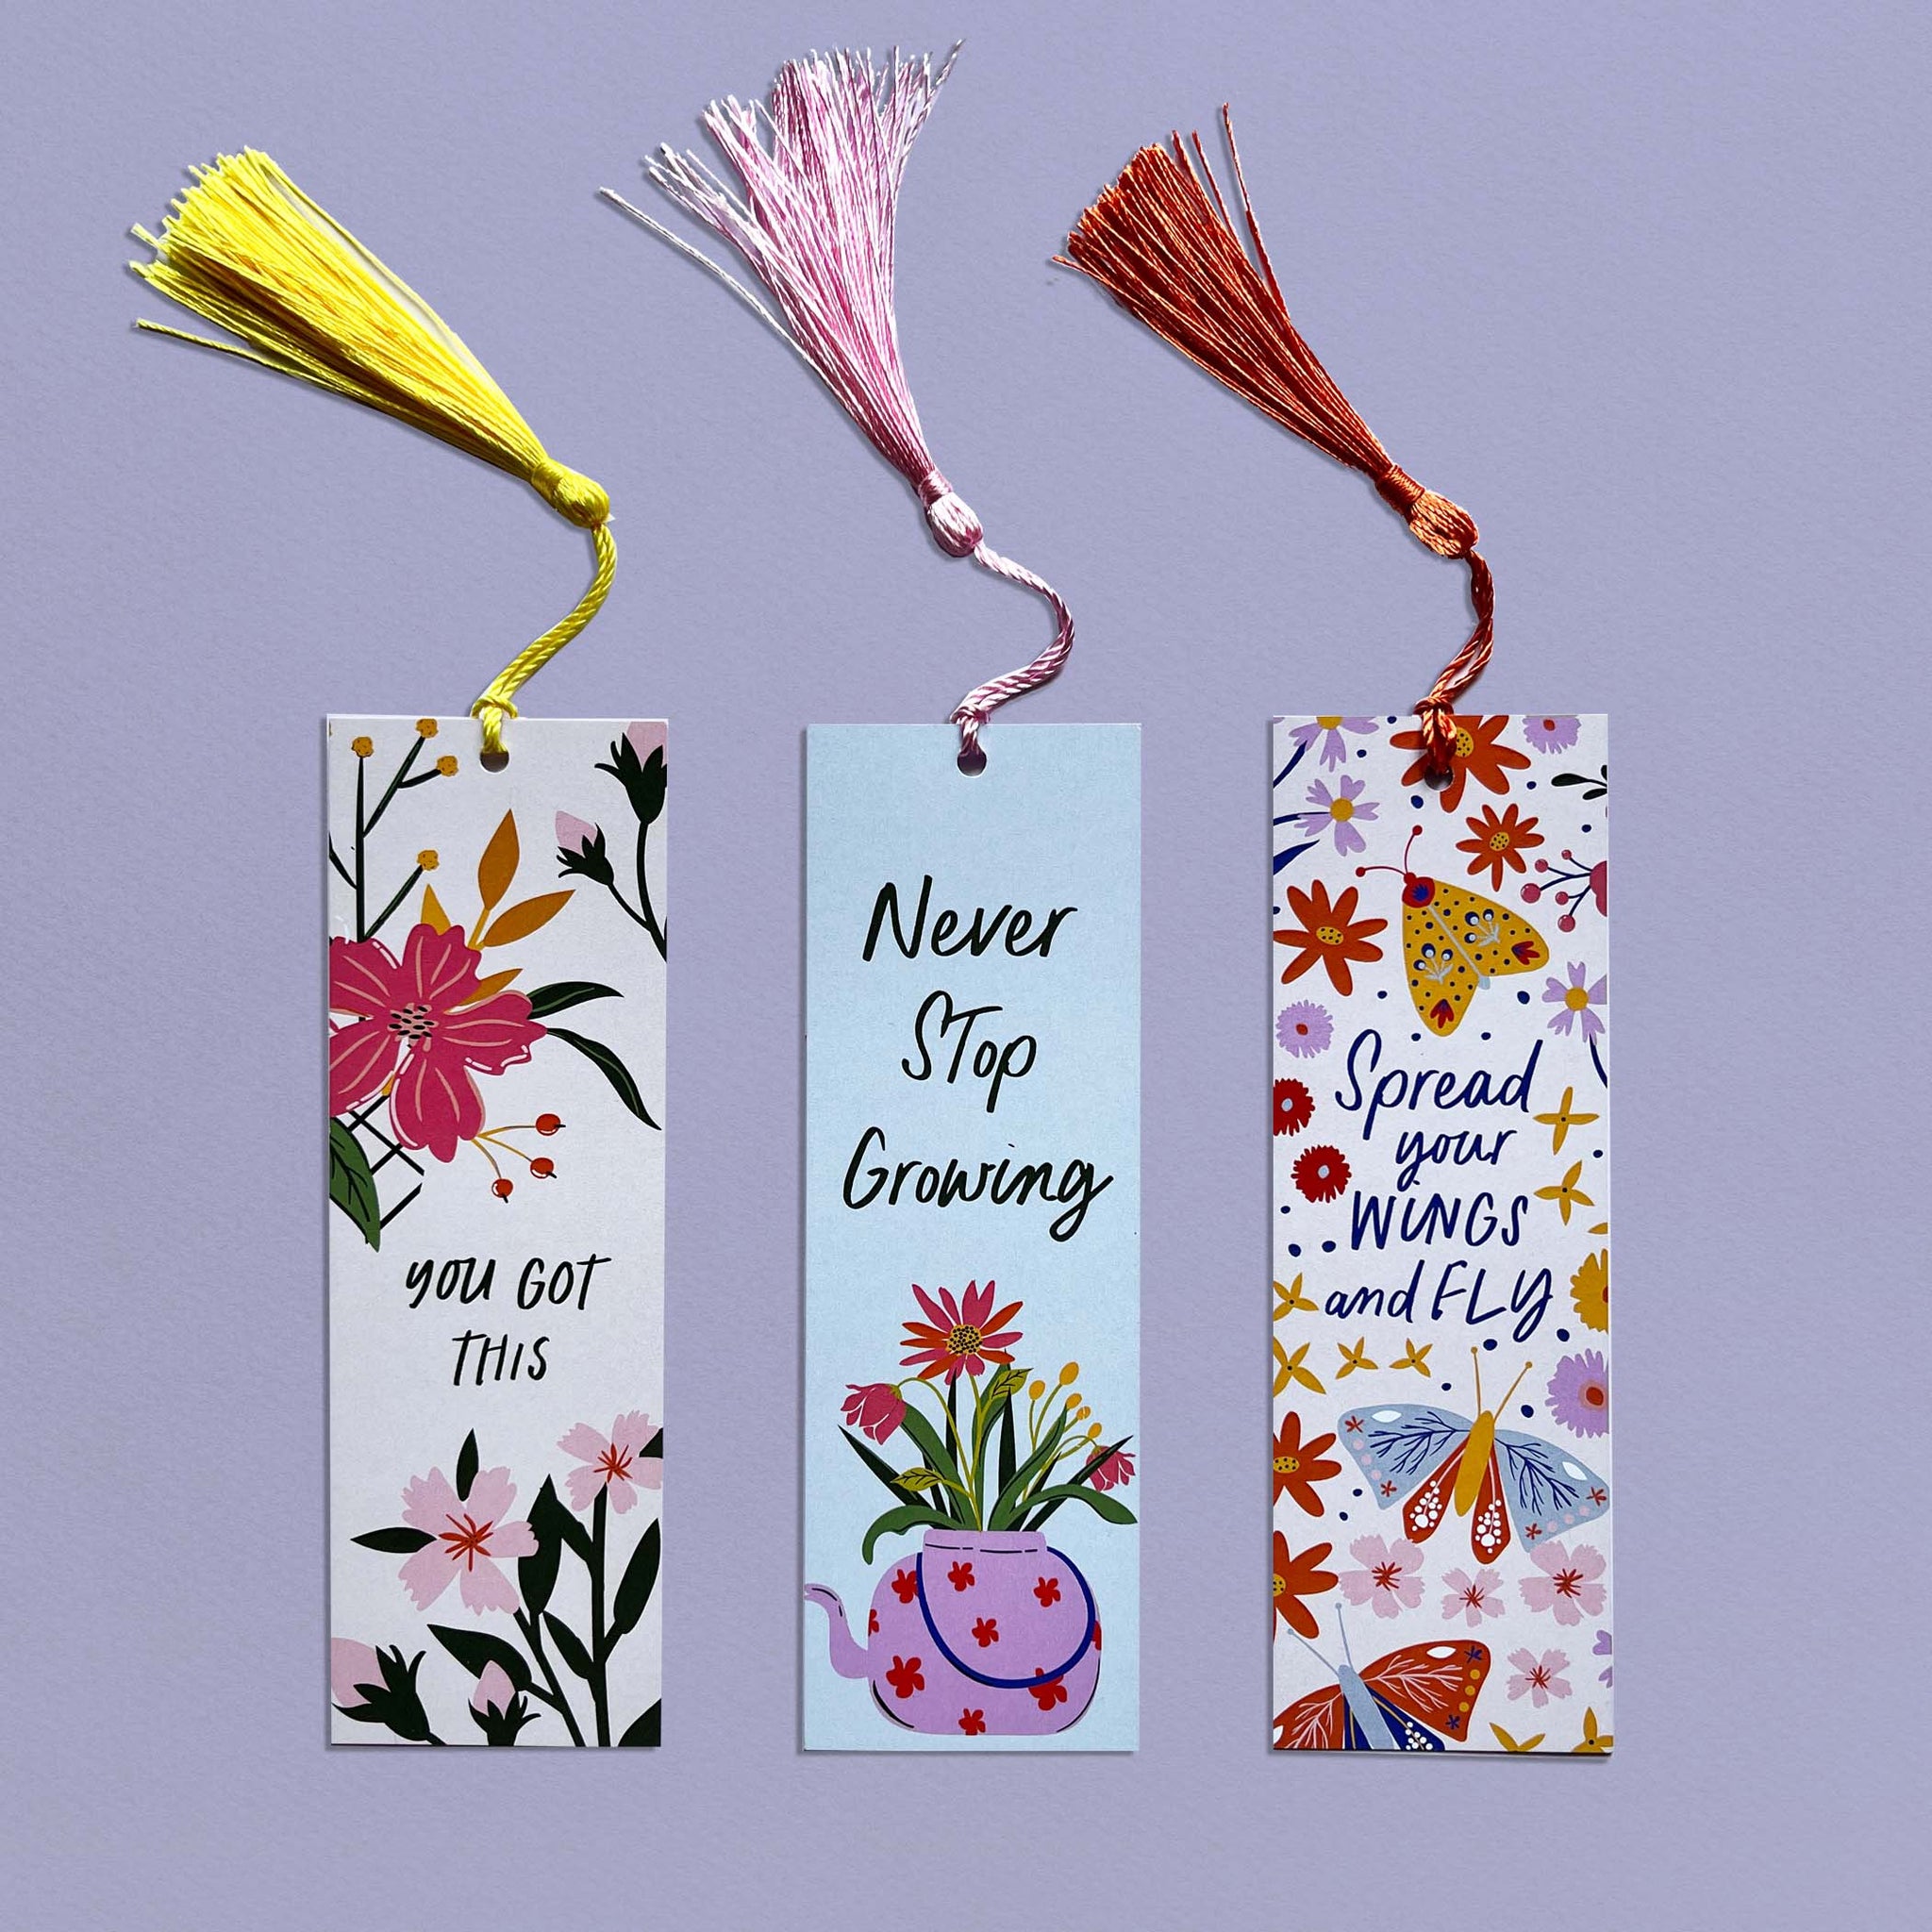 DIY: How-to aesthetic Bookmarks 📖✨🌻 @somekindwords blog